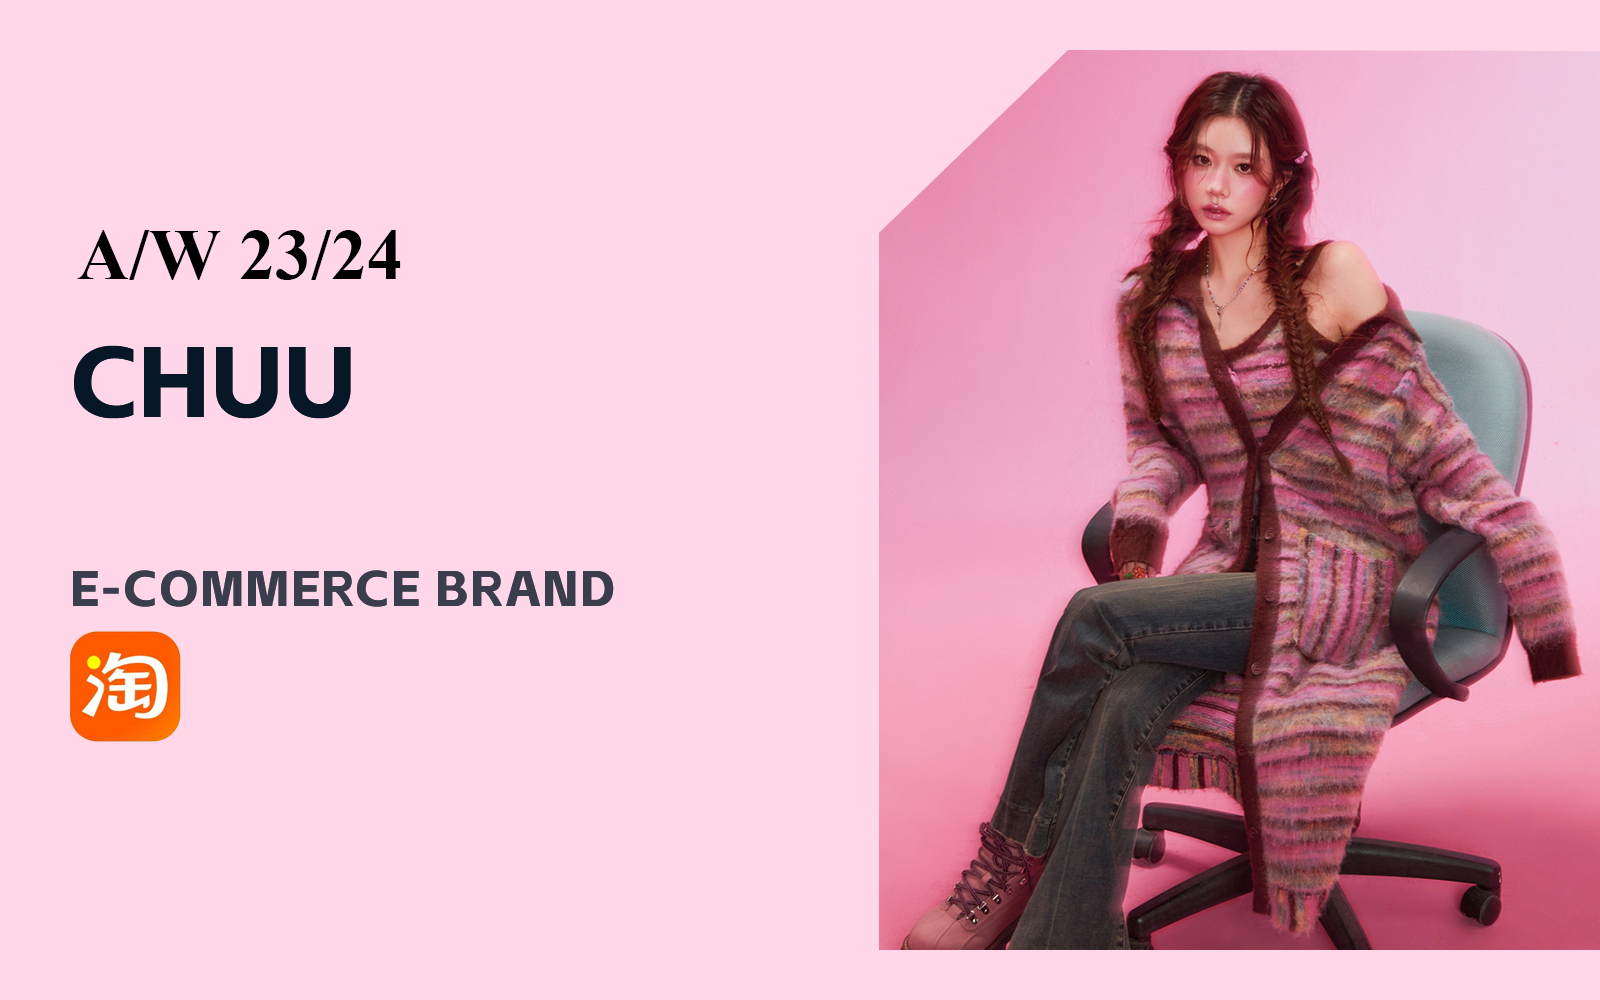 Sweet Hot Girl -- The Analysis of Chuu The Womenswear E-Commerce Brand